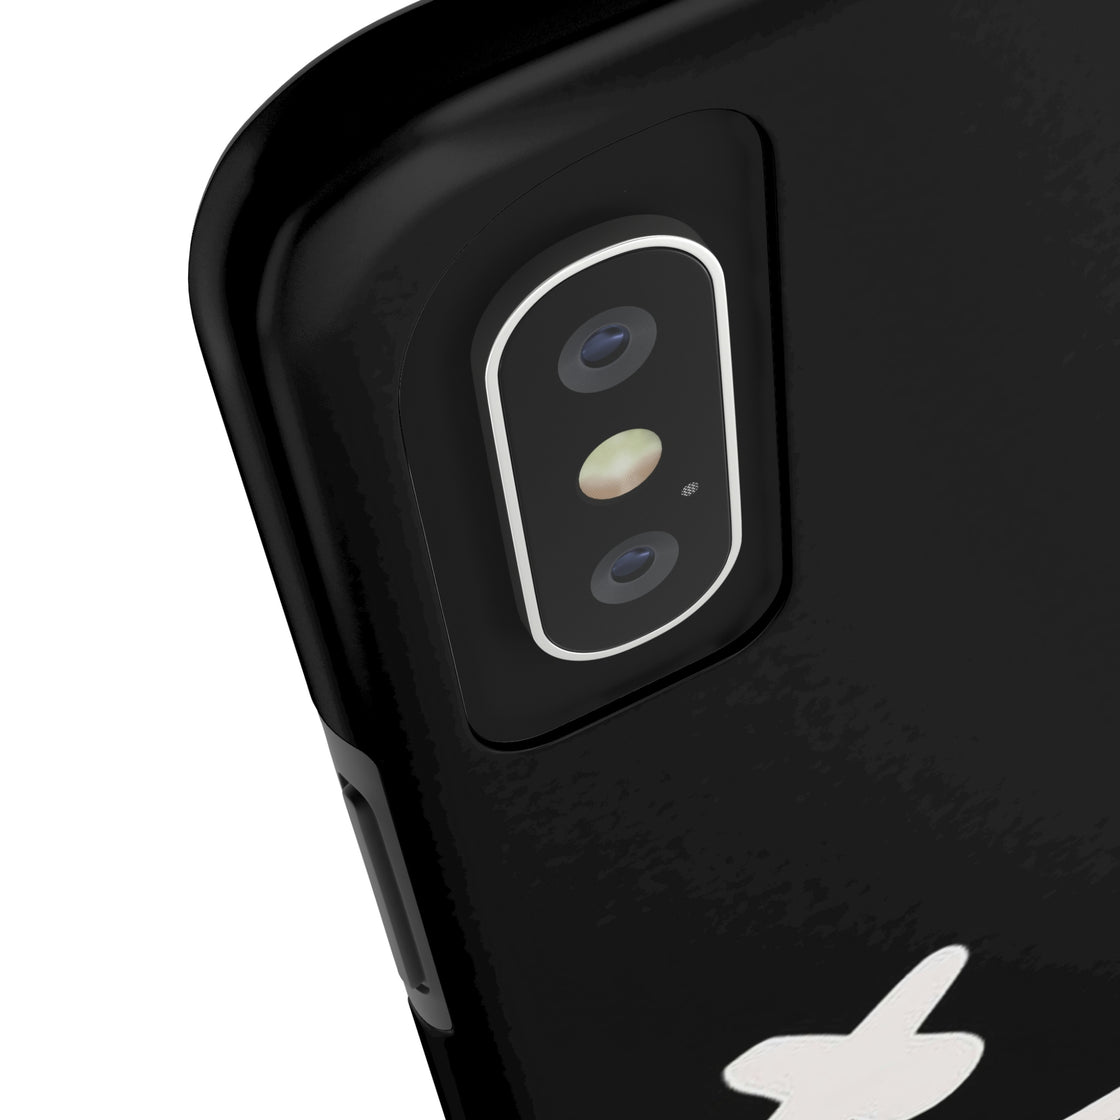 Svdden Death Tough iPhone Cases, Case-Mate IPhone